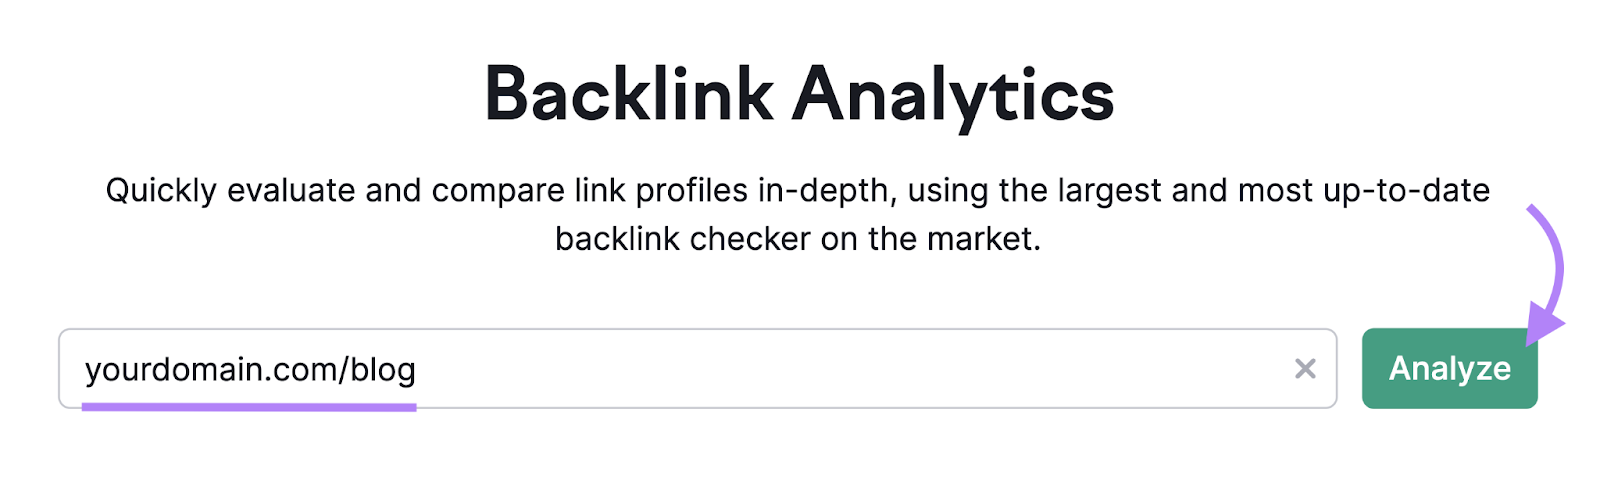 Backlink Analytics tool search bar